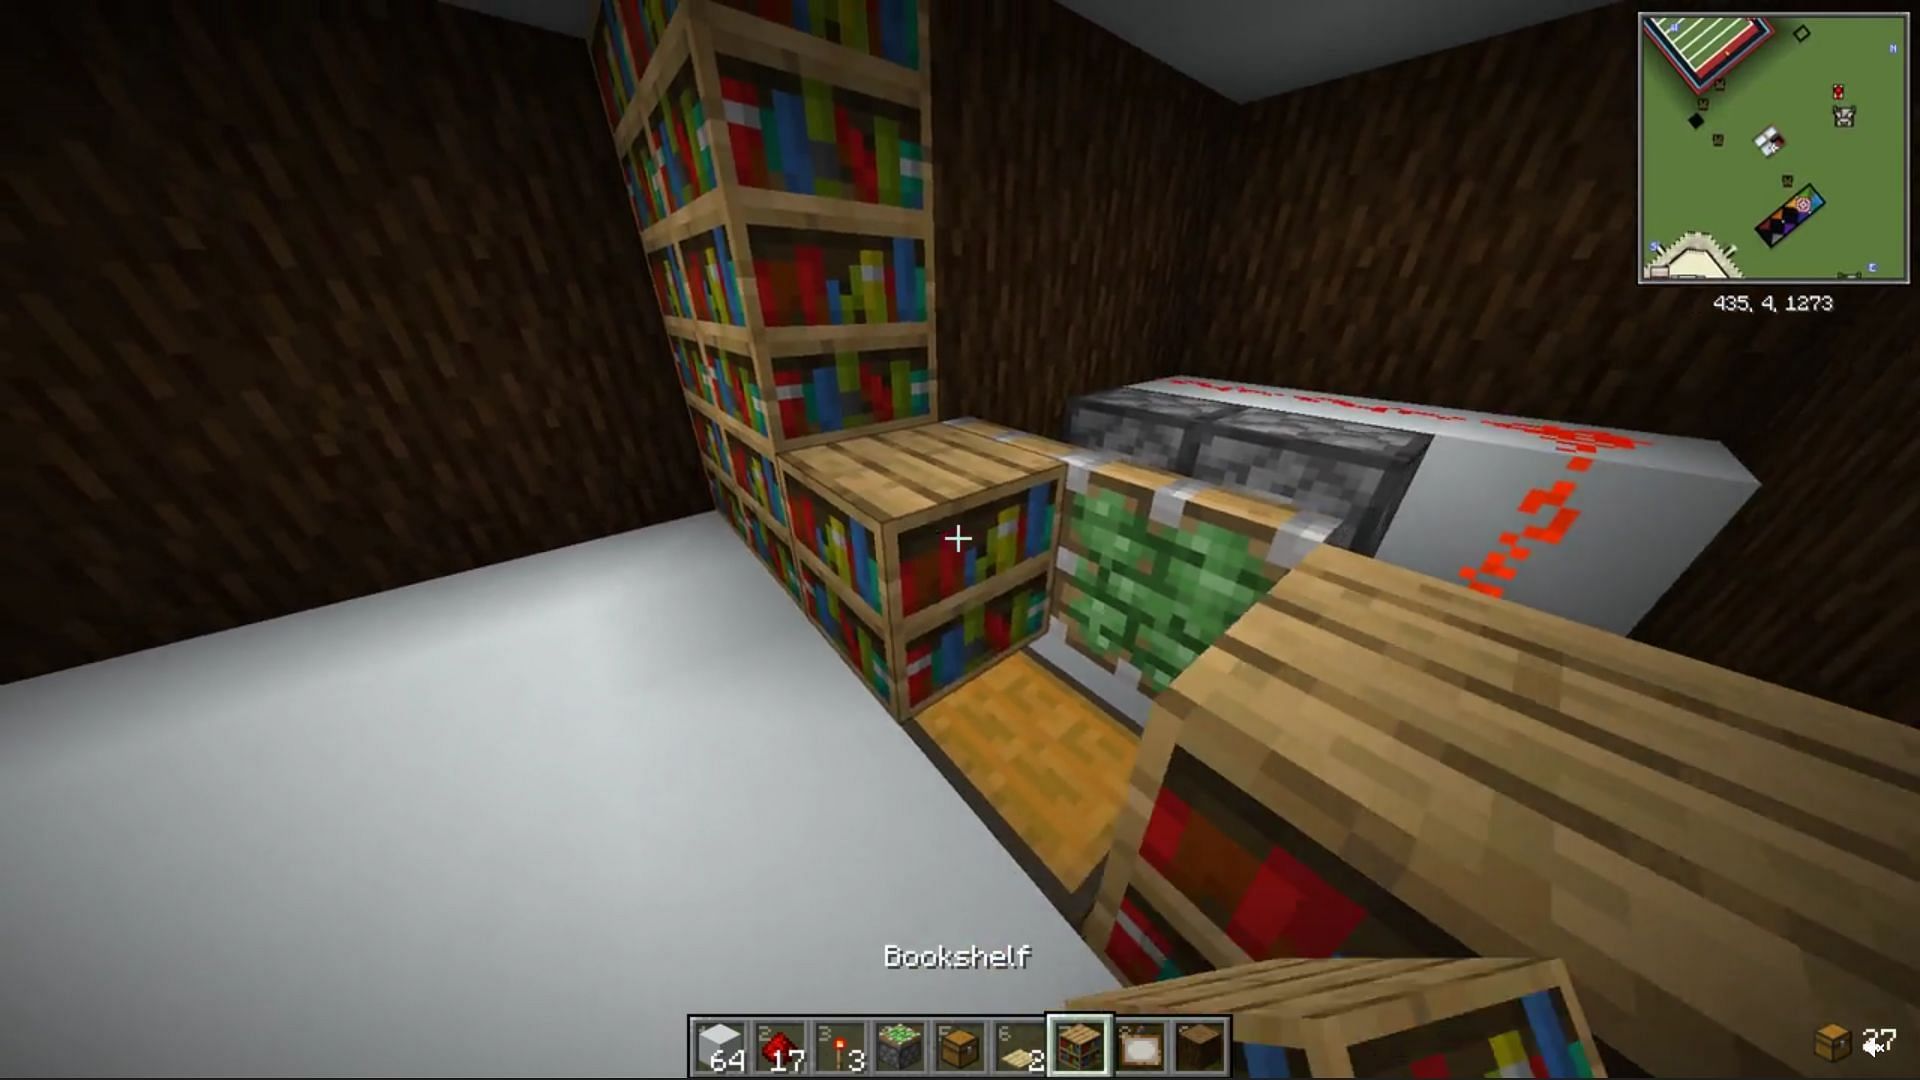 Complete redstone contraption behind the bookshelves (Image via u/manimanito100/Reddit)